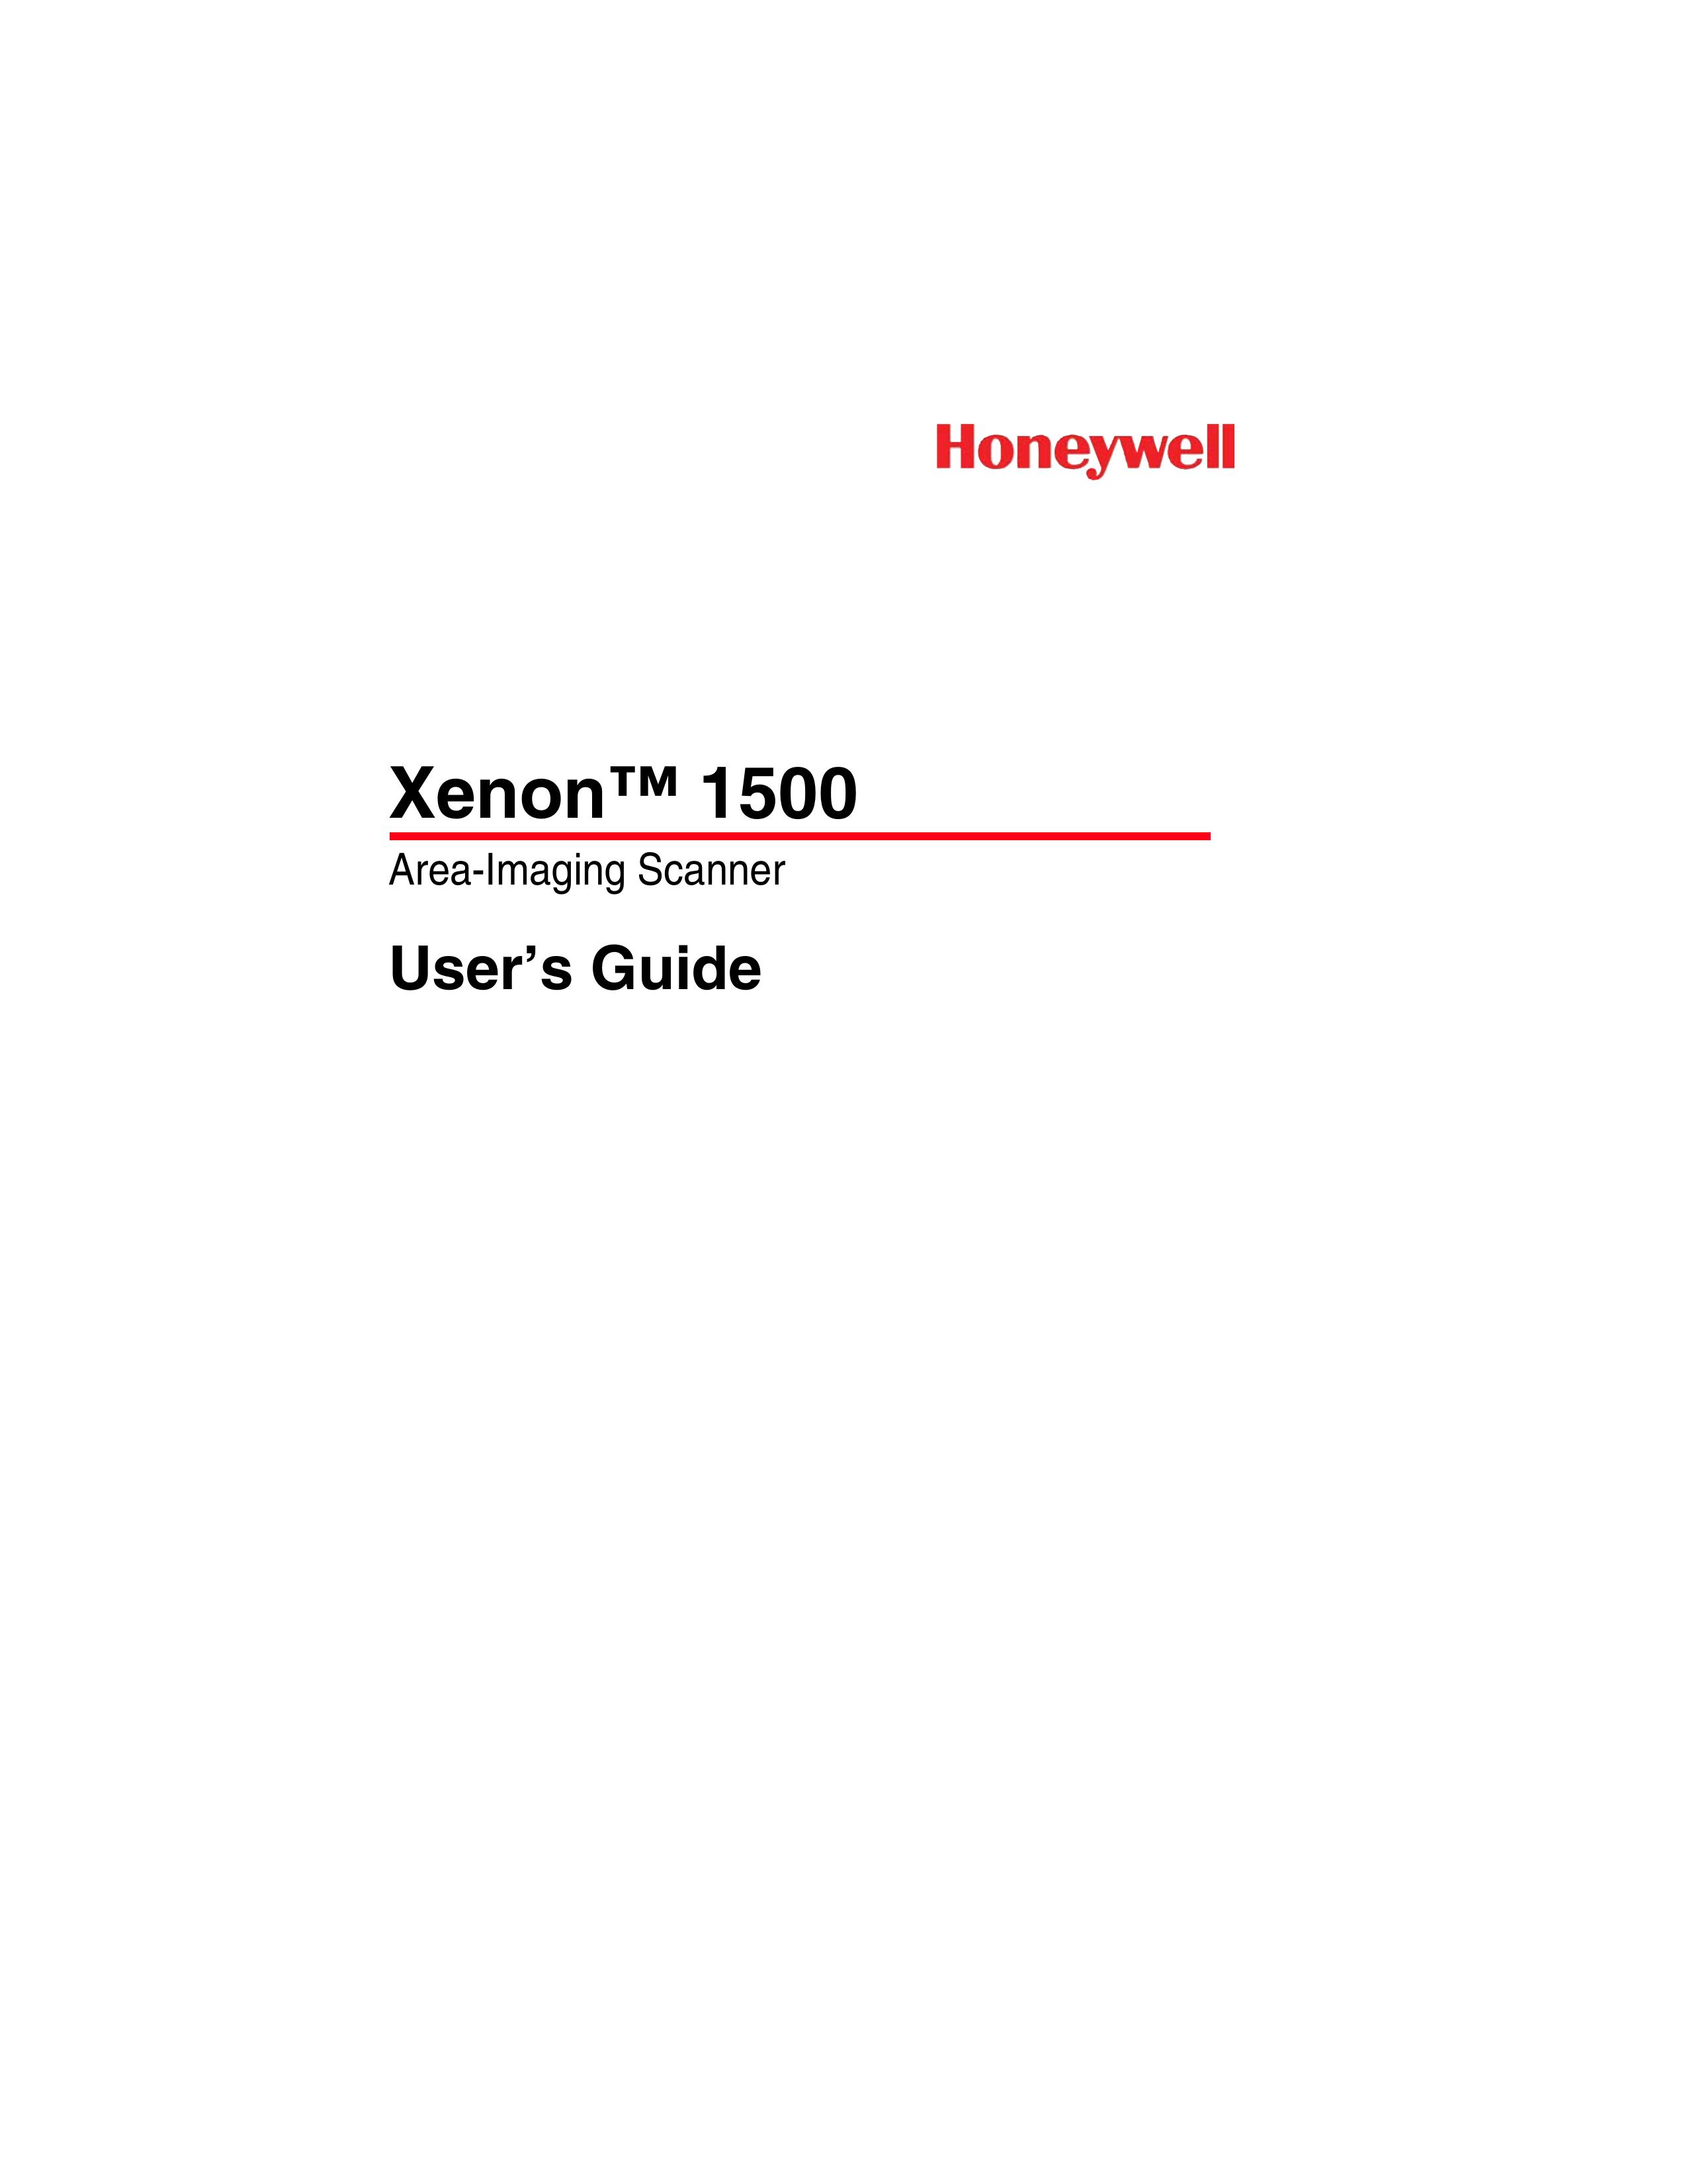 Honeywell Xenon 1500 Photo Scanner User Manual